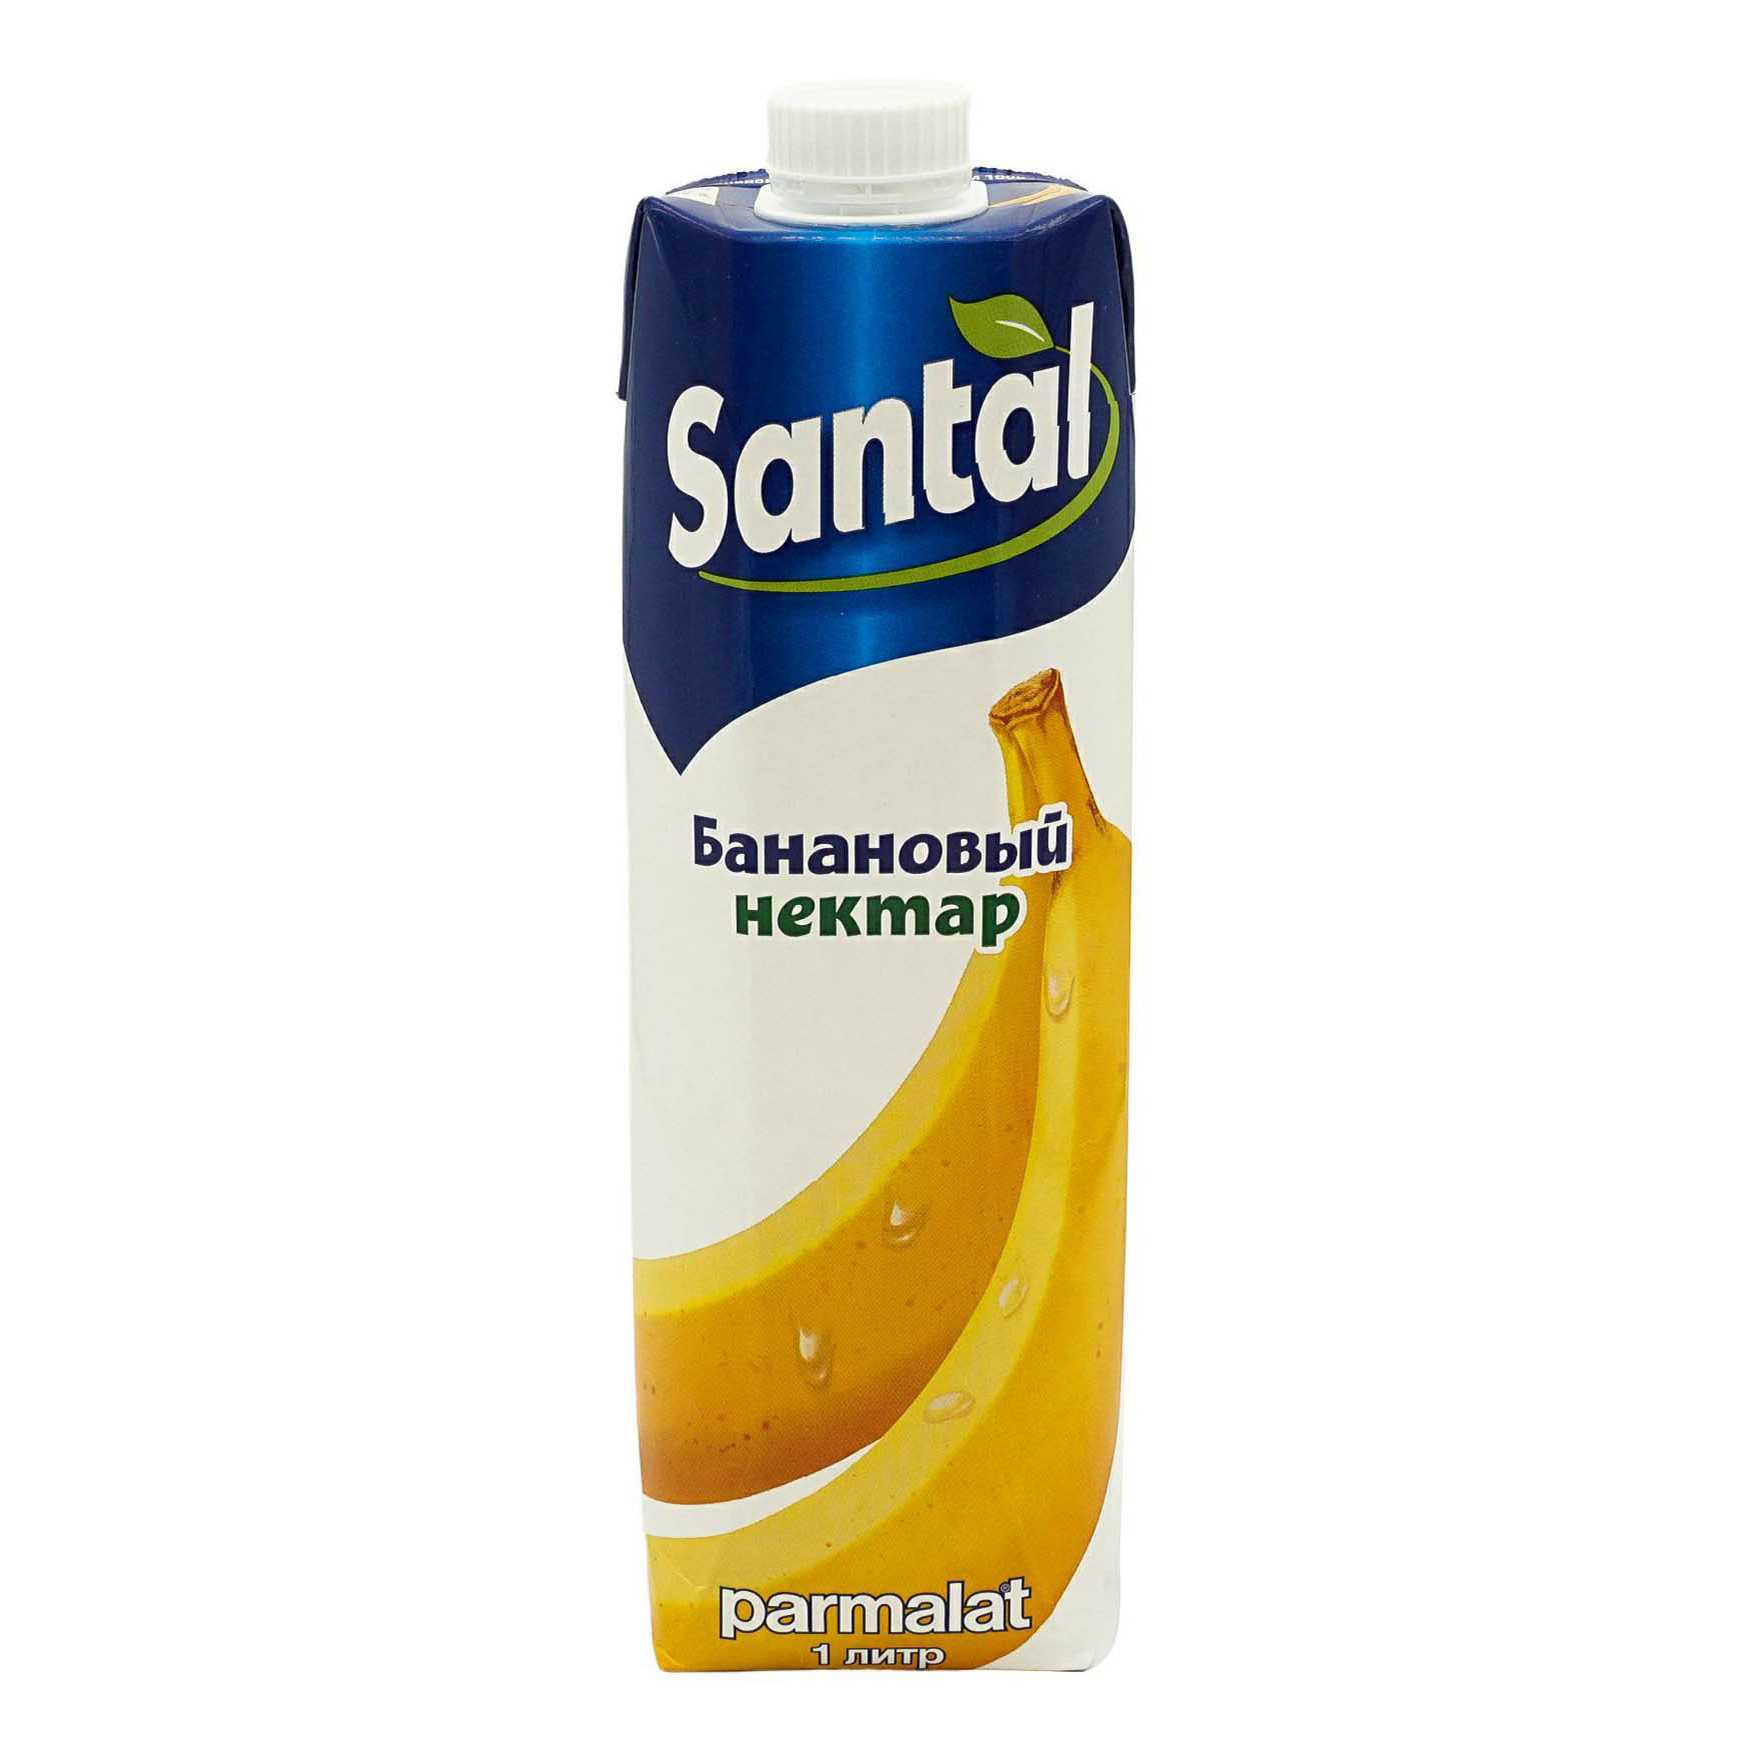 Нектар банан. Santal банановый нектар. Нектар Santal банановый 1л. Сок Santal банан 1л. Santal нектар Santal банан 1л.